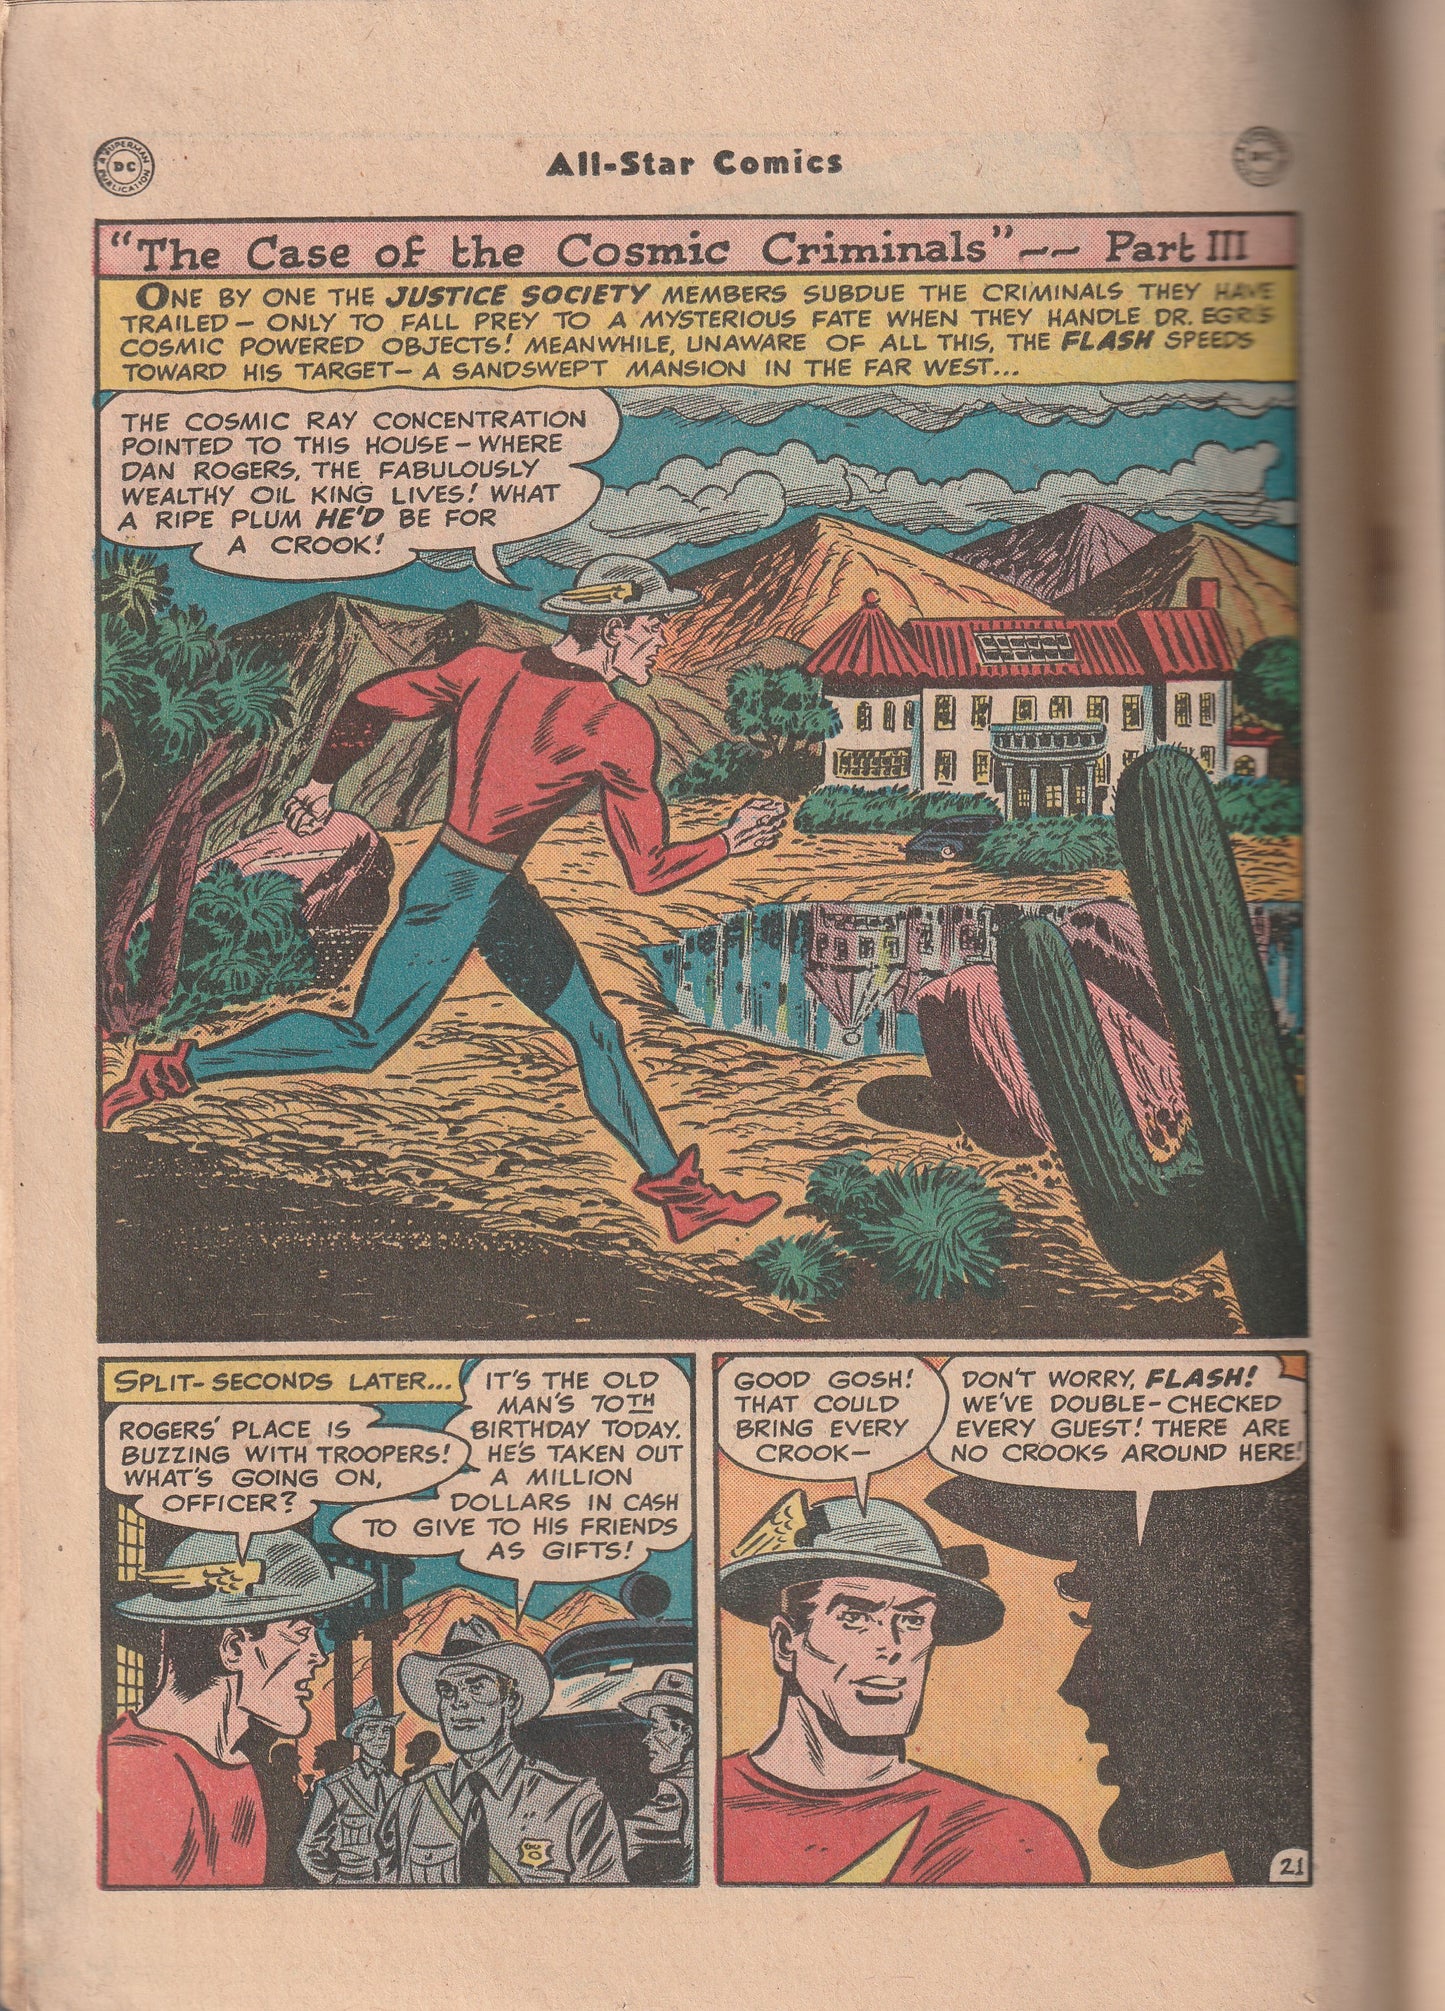 All-Star Comics #45 (1949) - *Coverless*